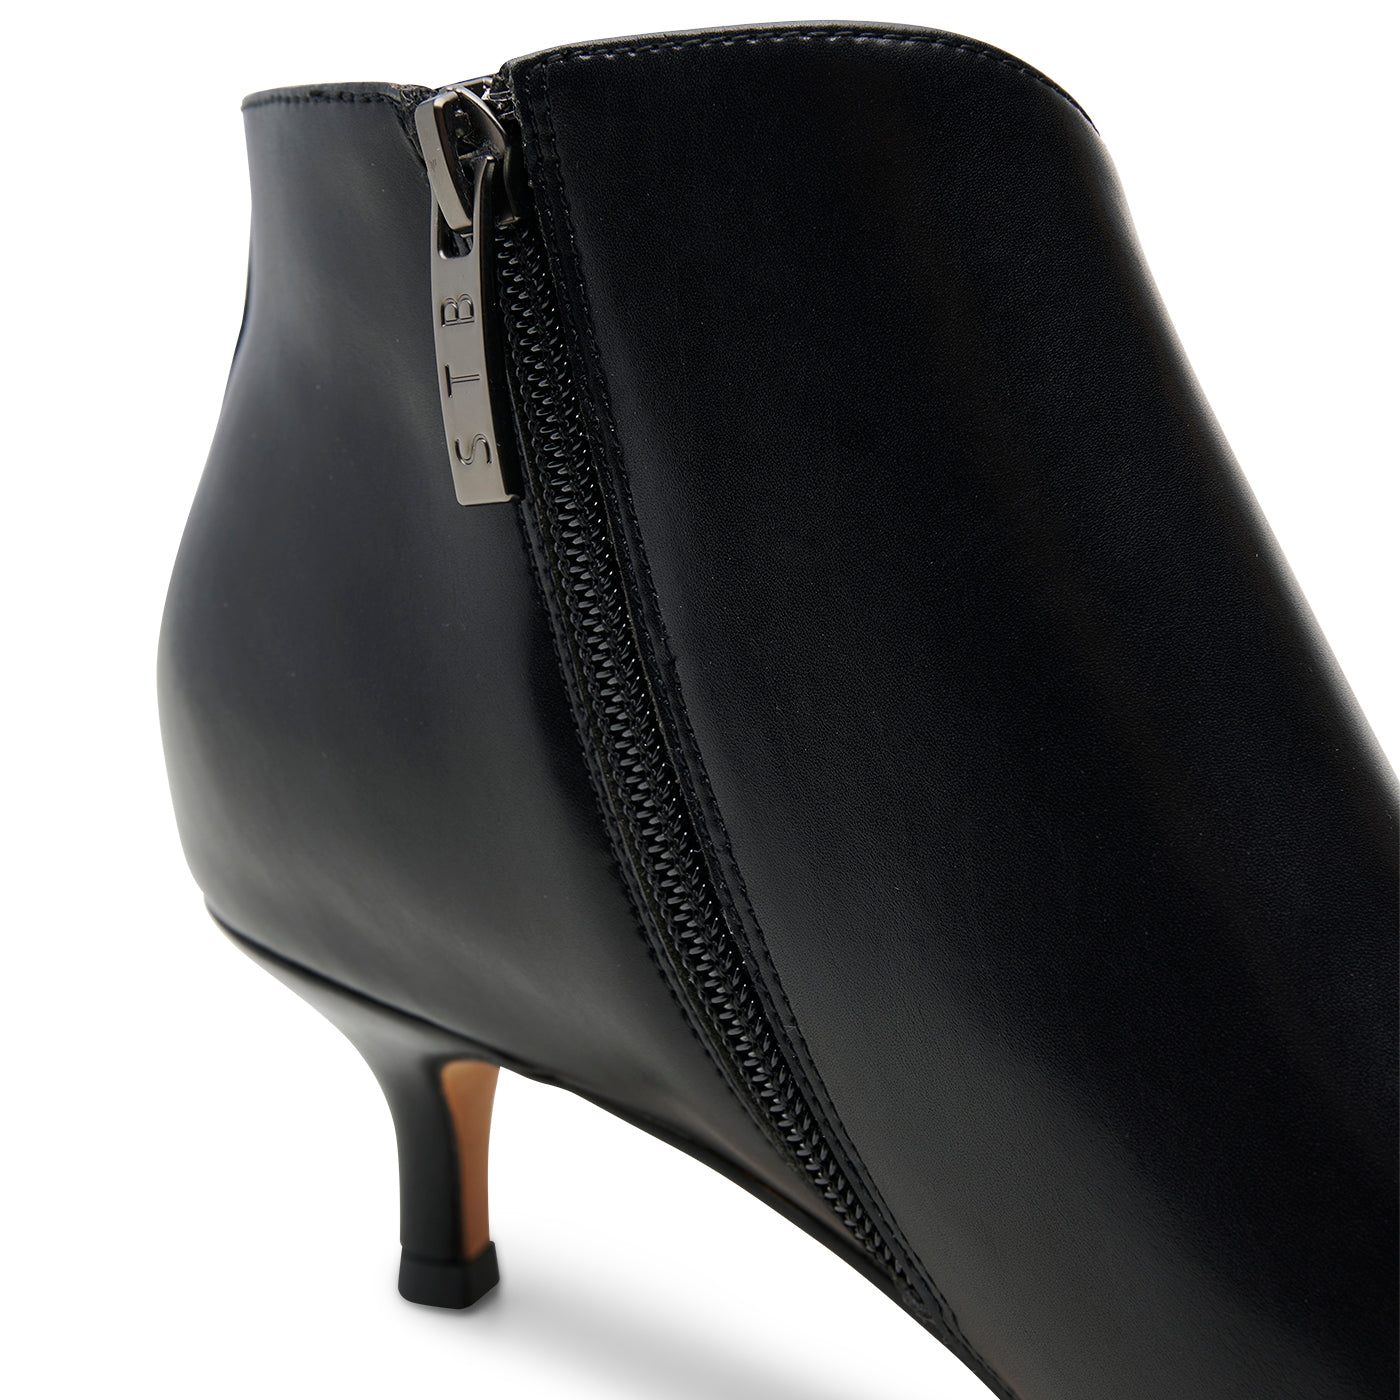 SHOE THE BEAR WOMENS Saga støvlet læder Heels 110 BLACK